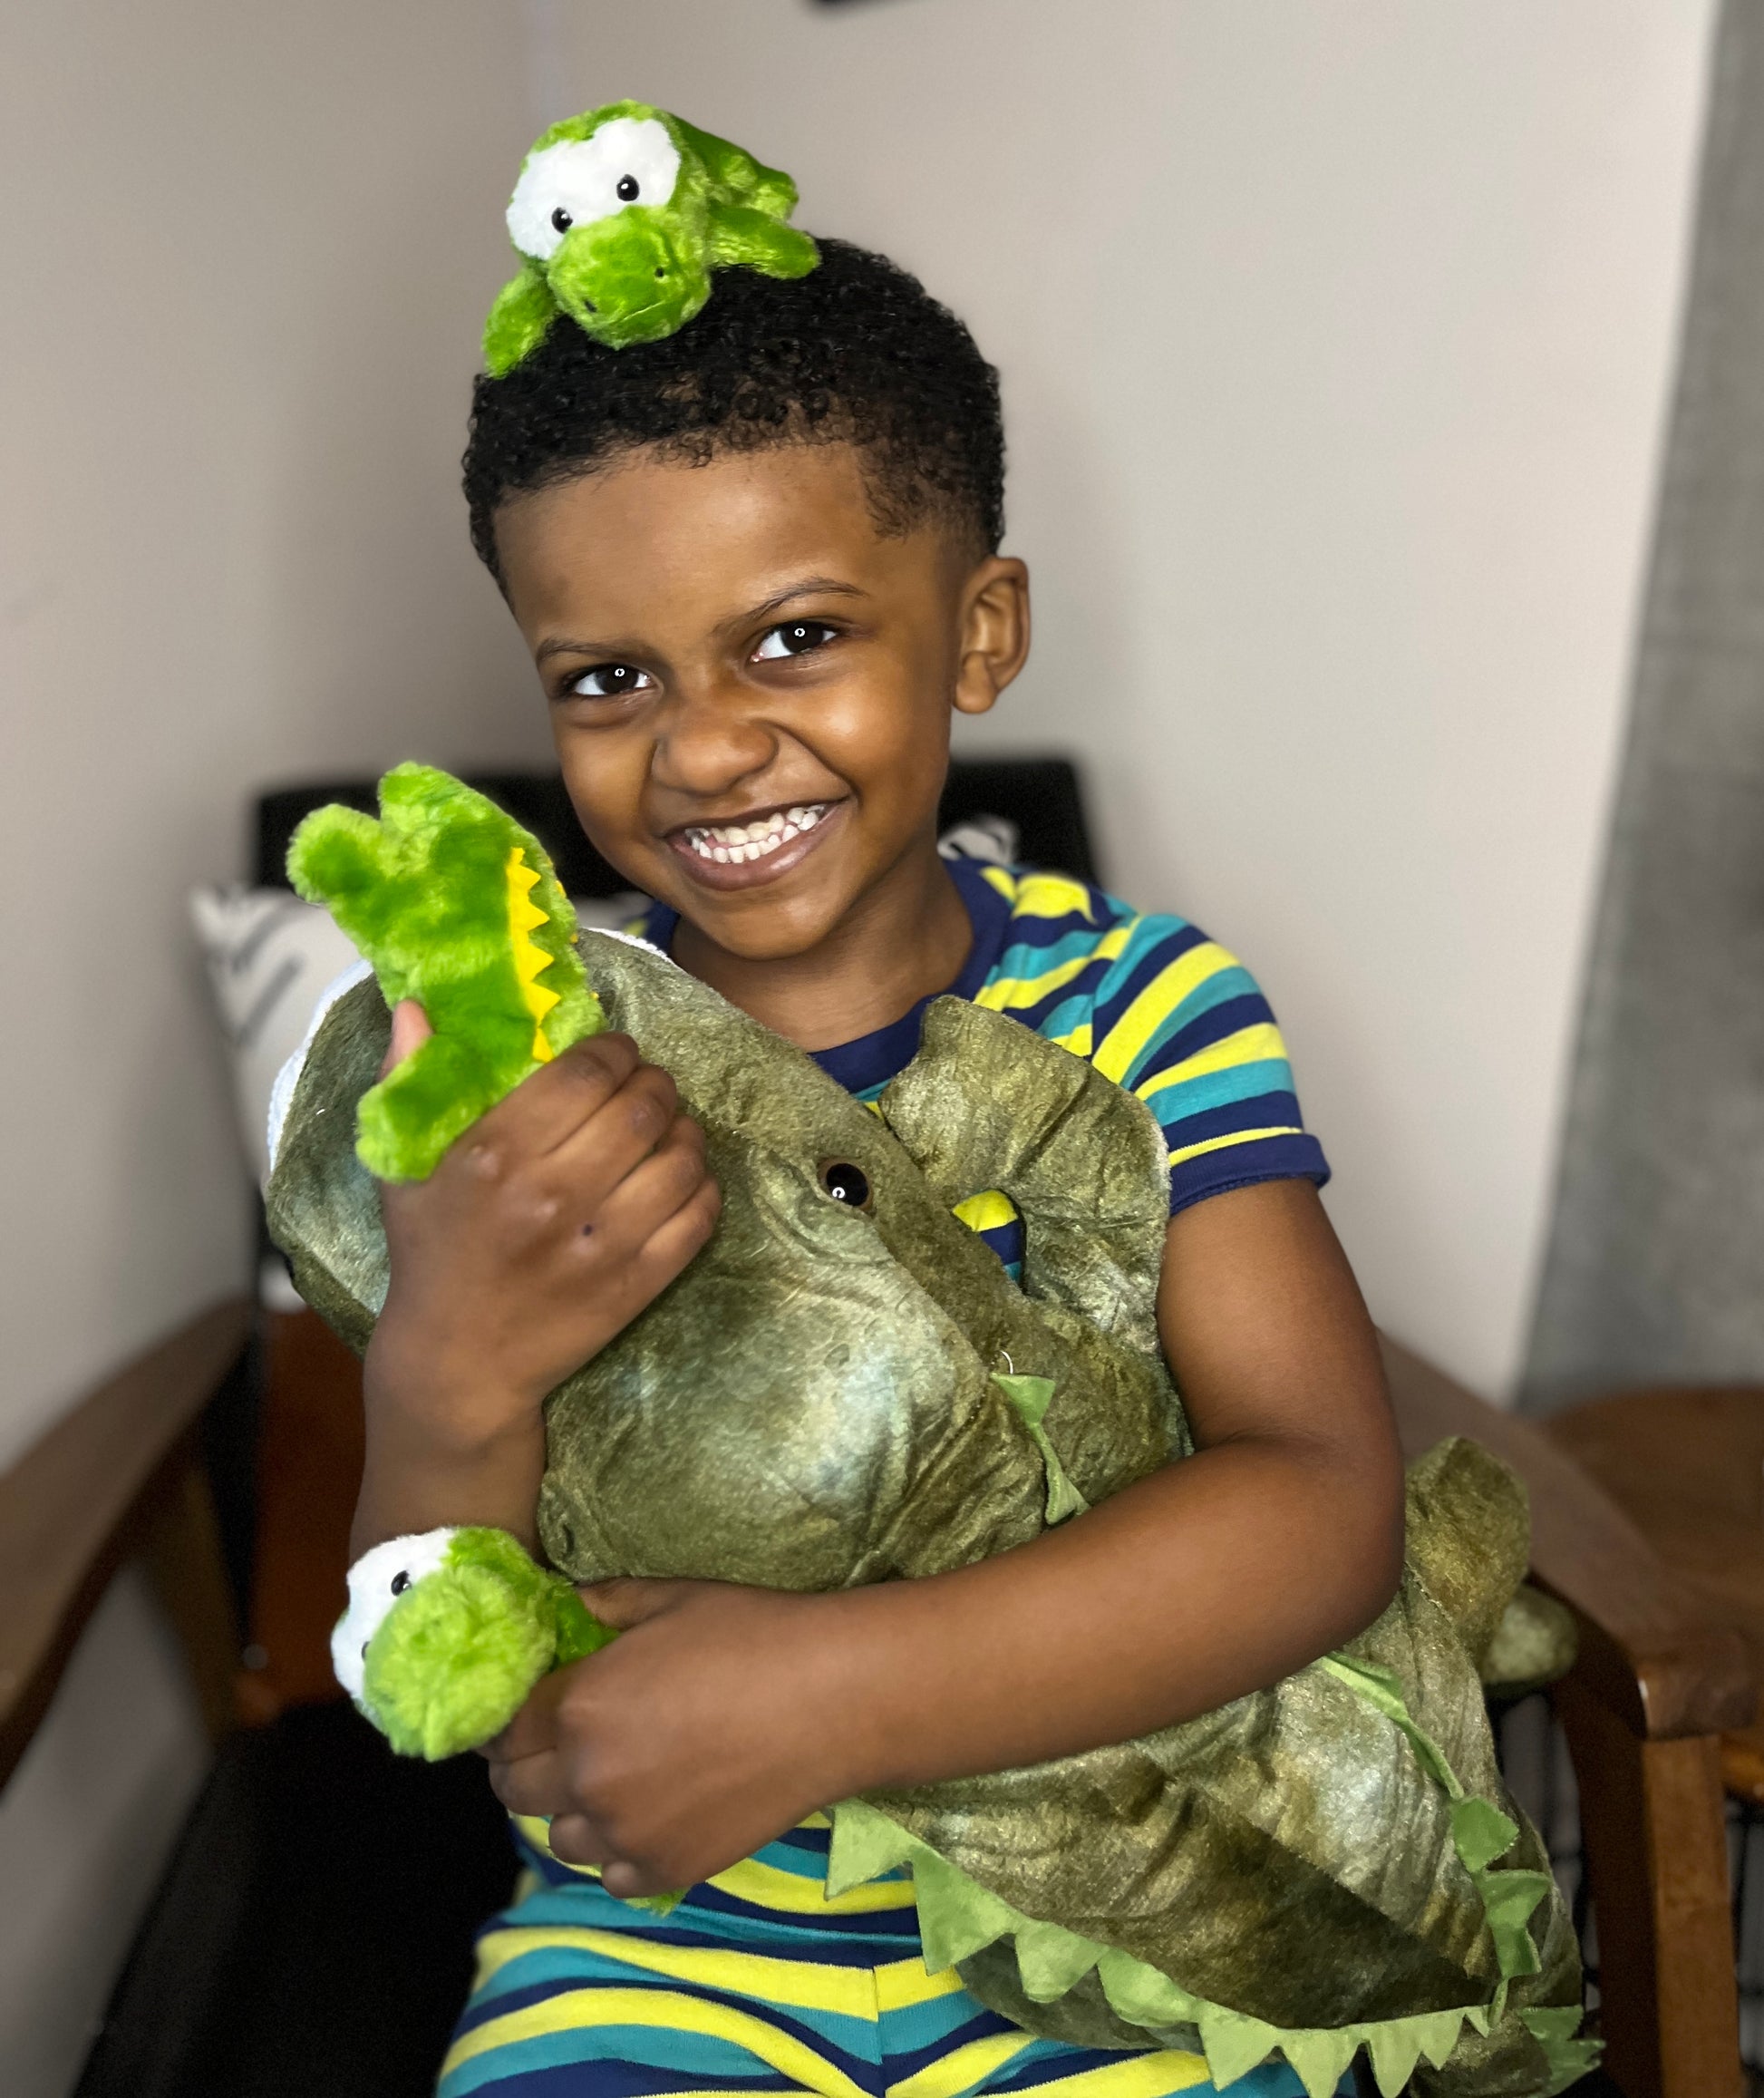 Alligator Stuffed Animal with 3 Baby Crocodiles, Green, 24 Inches